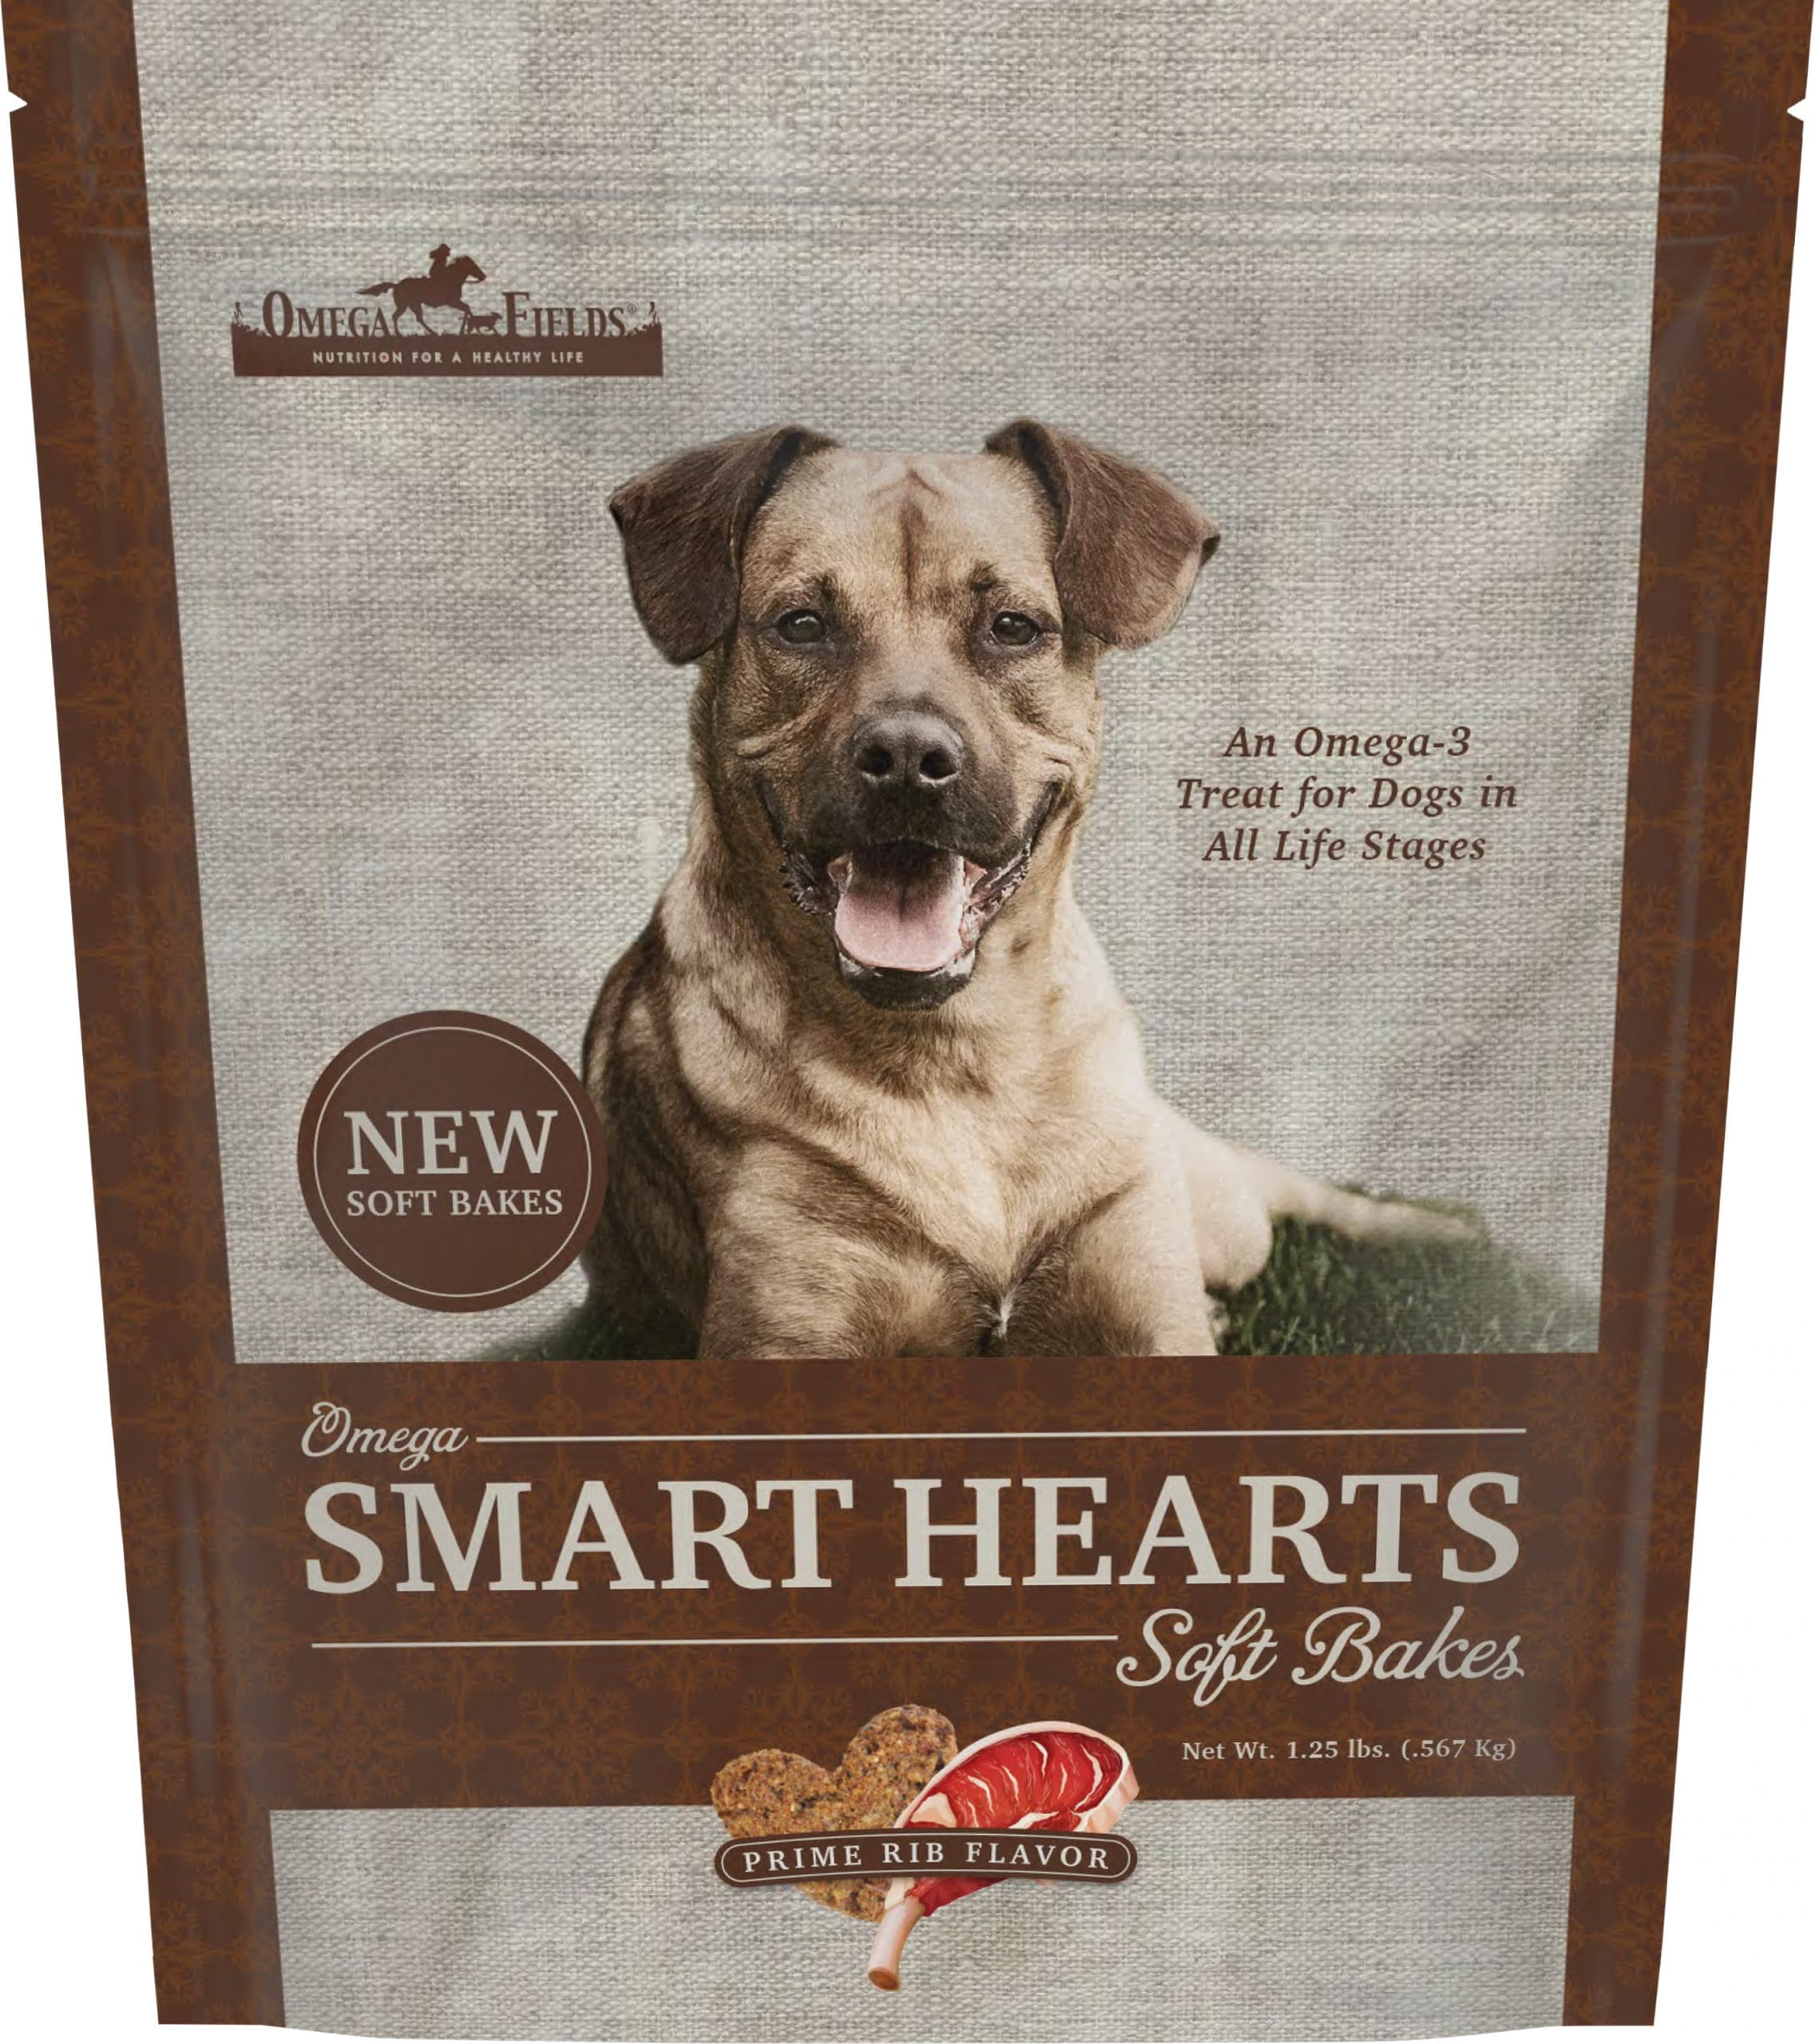 Omega Fields Smart Hearts Dog Treats Actual